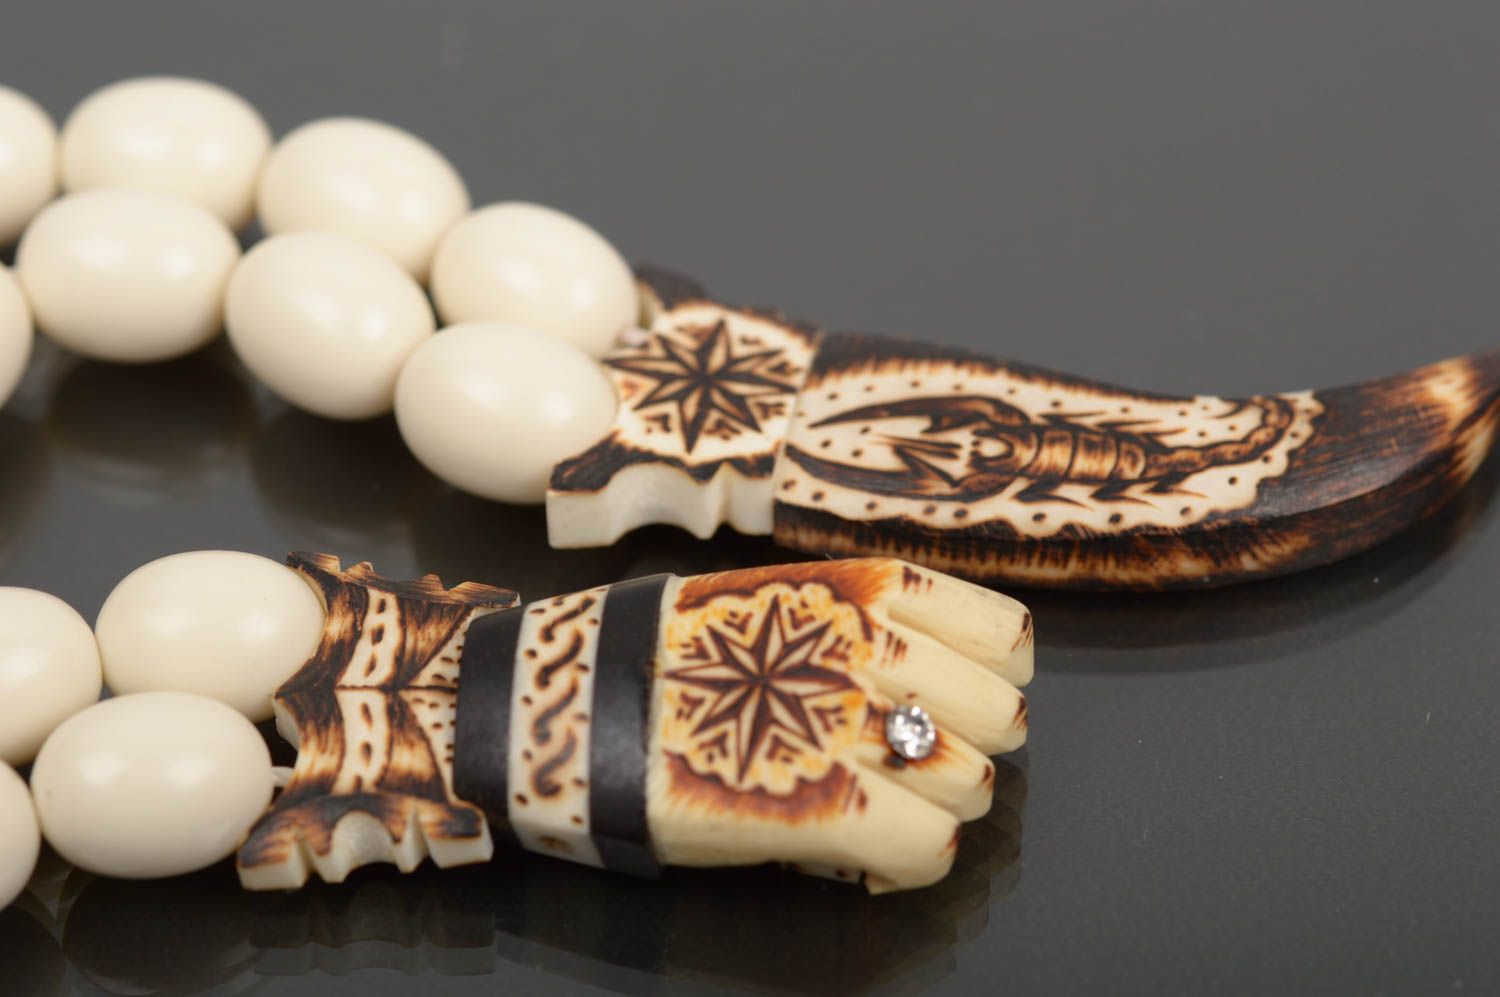 Handmade rosary beads church accessories spiritual gifts worry beads mens gifts photo 2